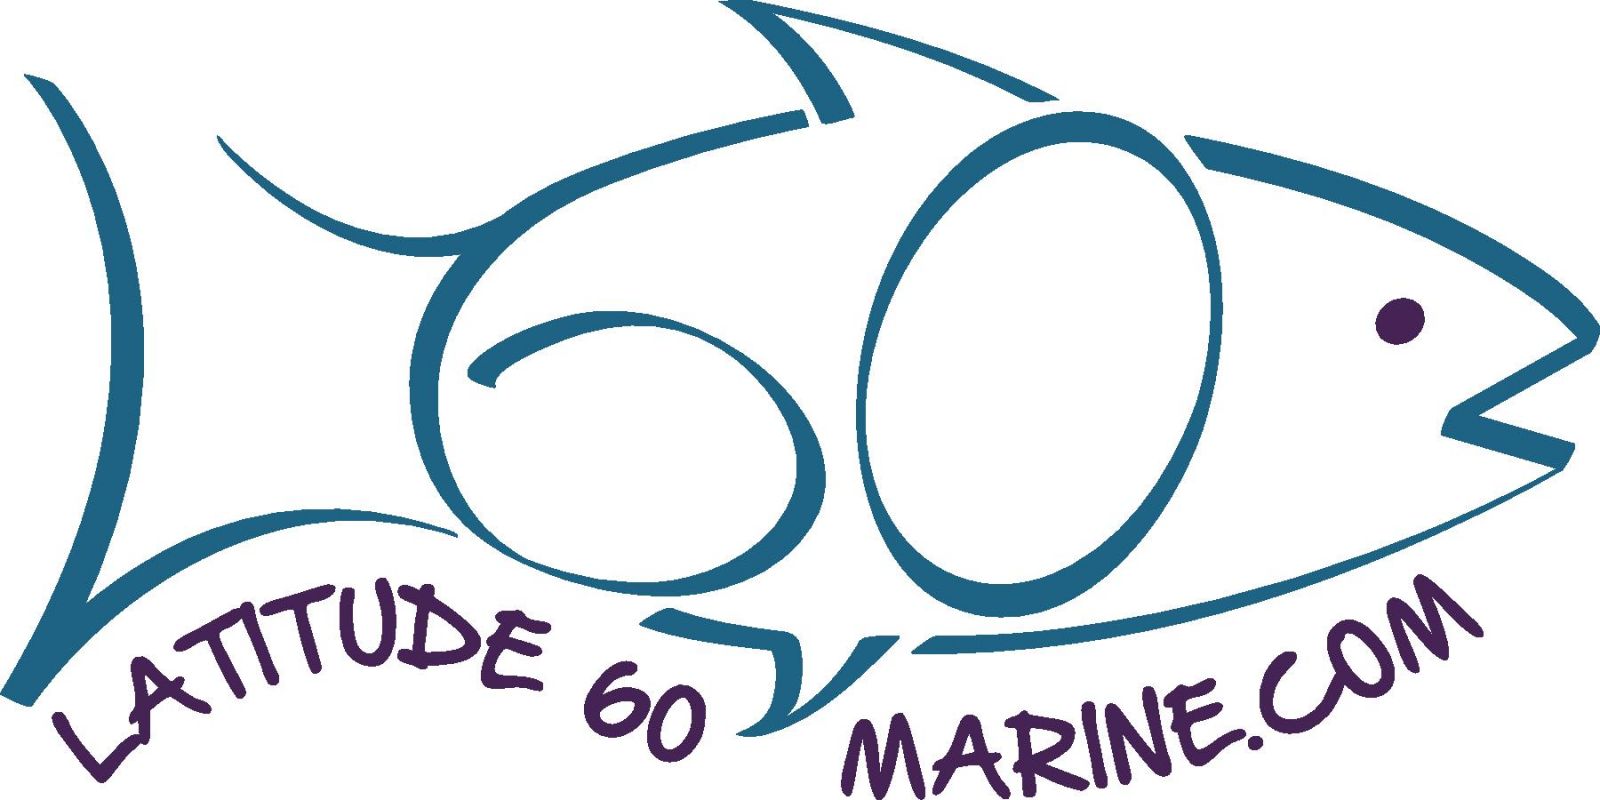 Latitude 60 Marine